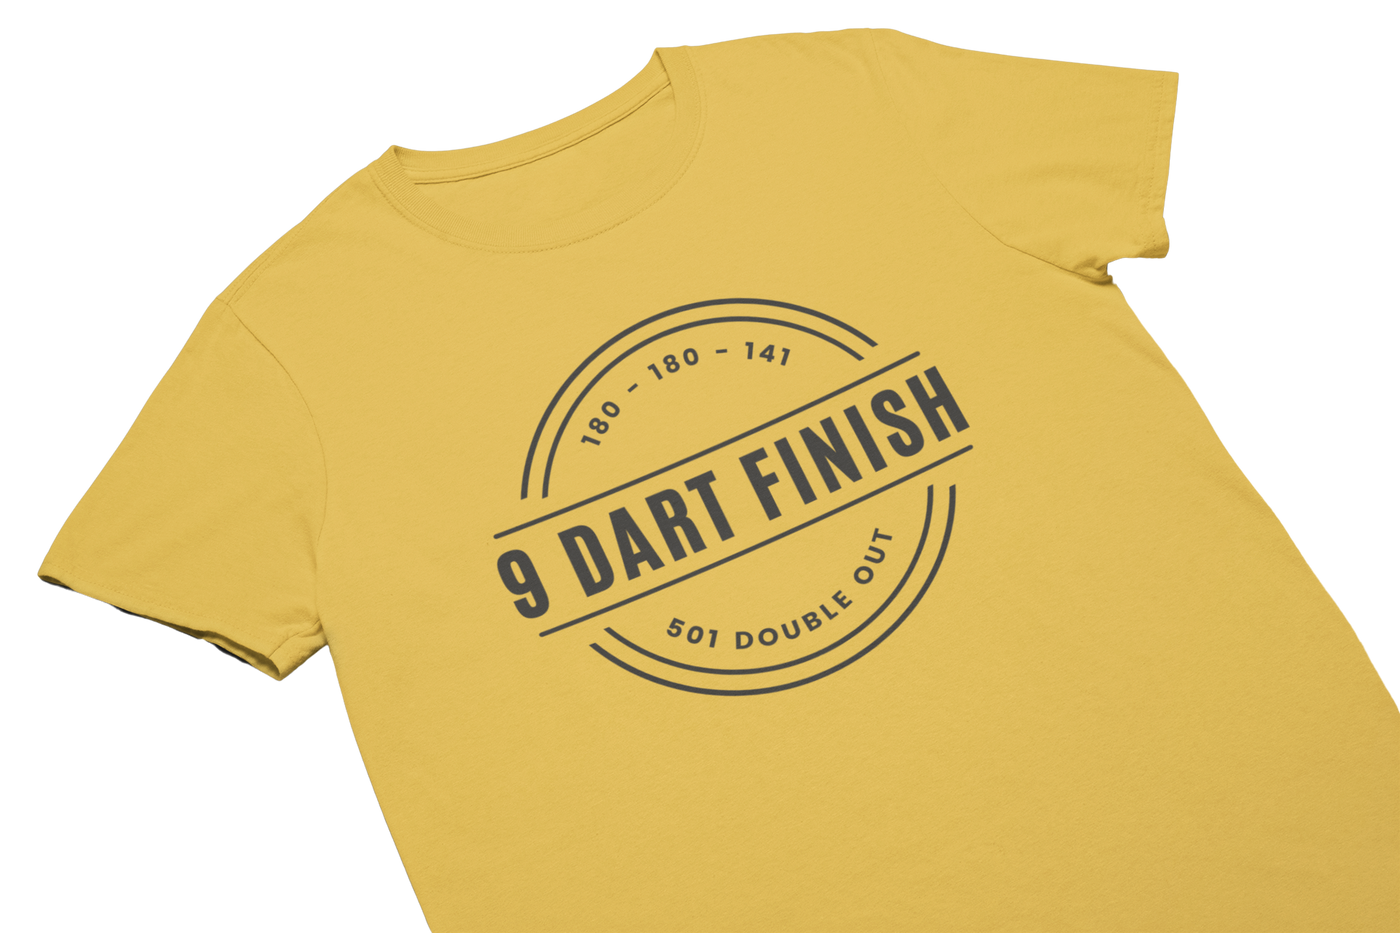 9 DART FINISH (Schwarzes Logo) - T-Shirt Gold